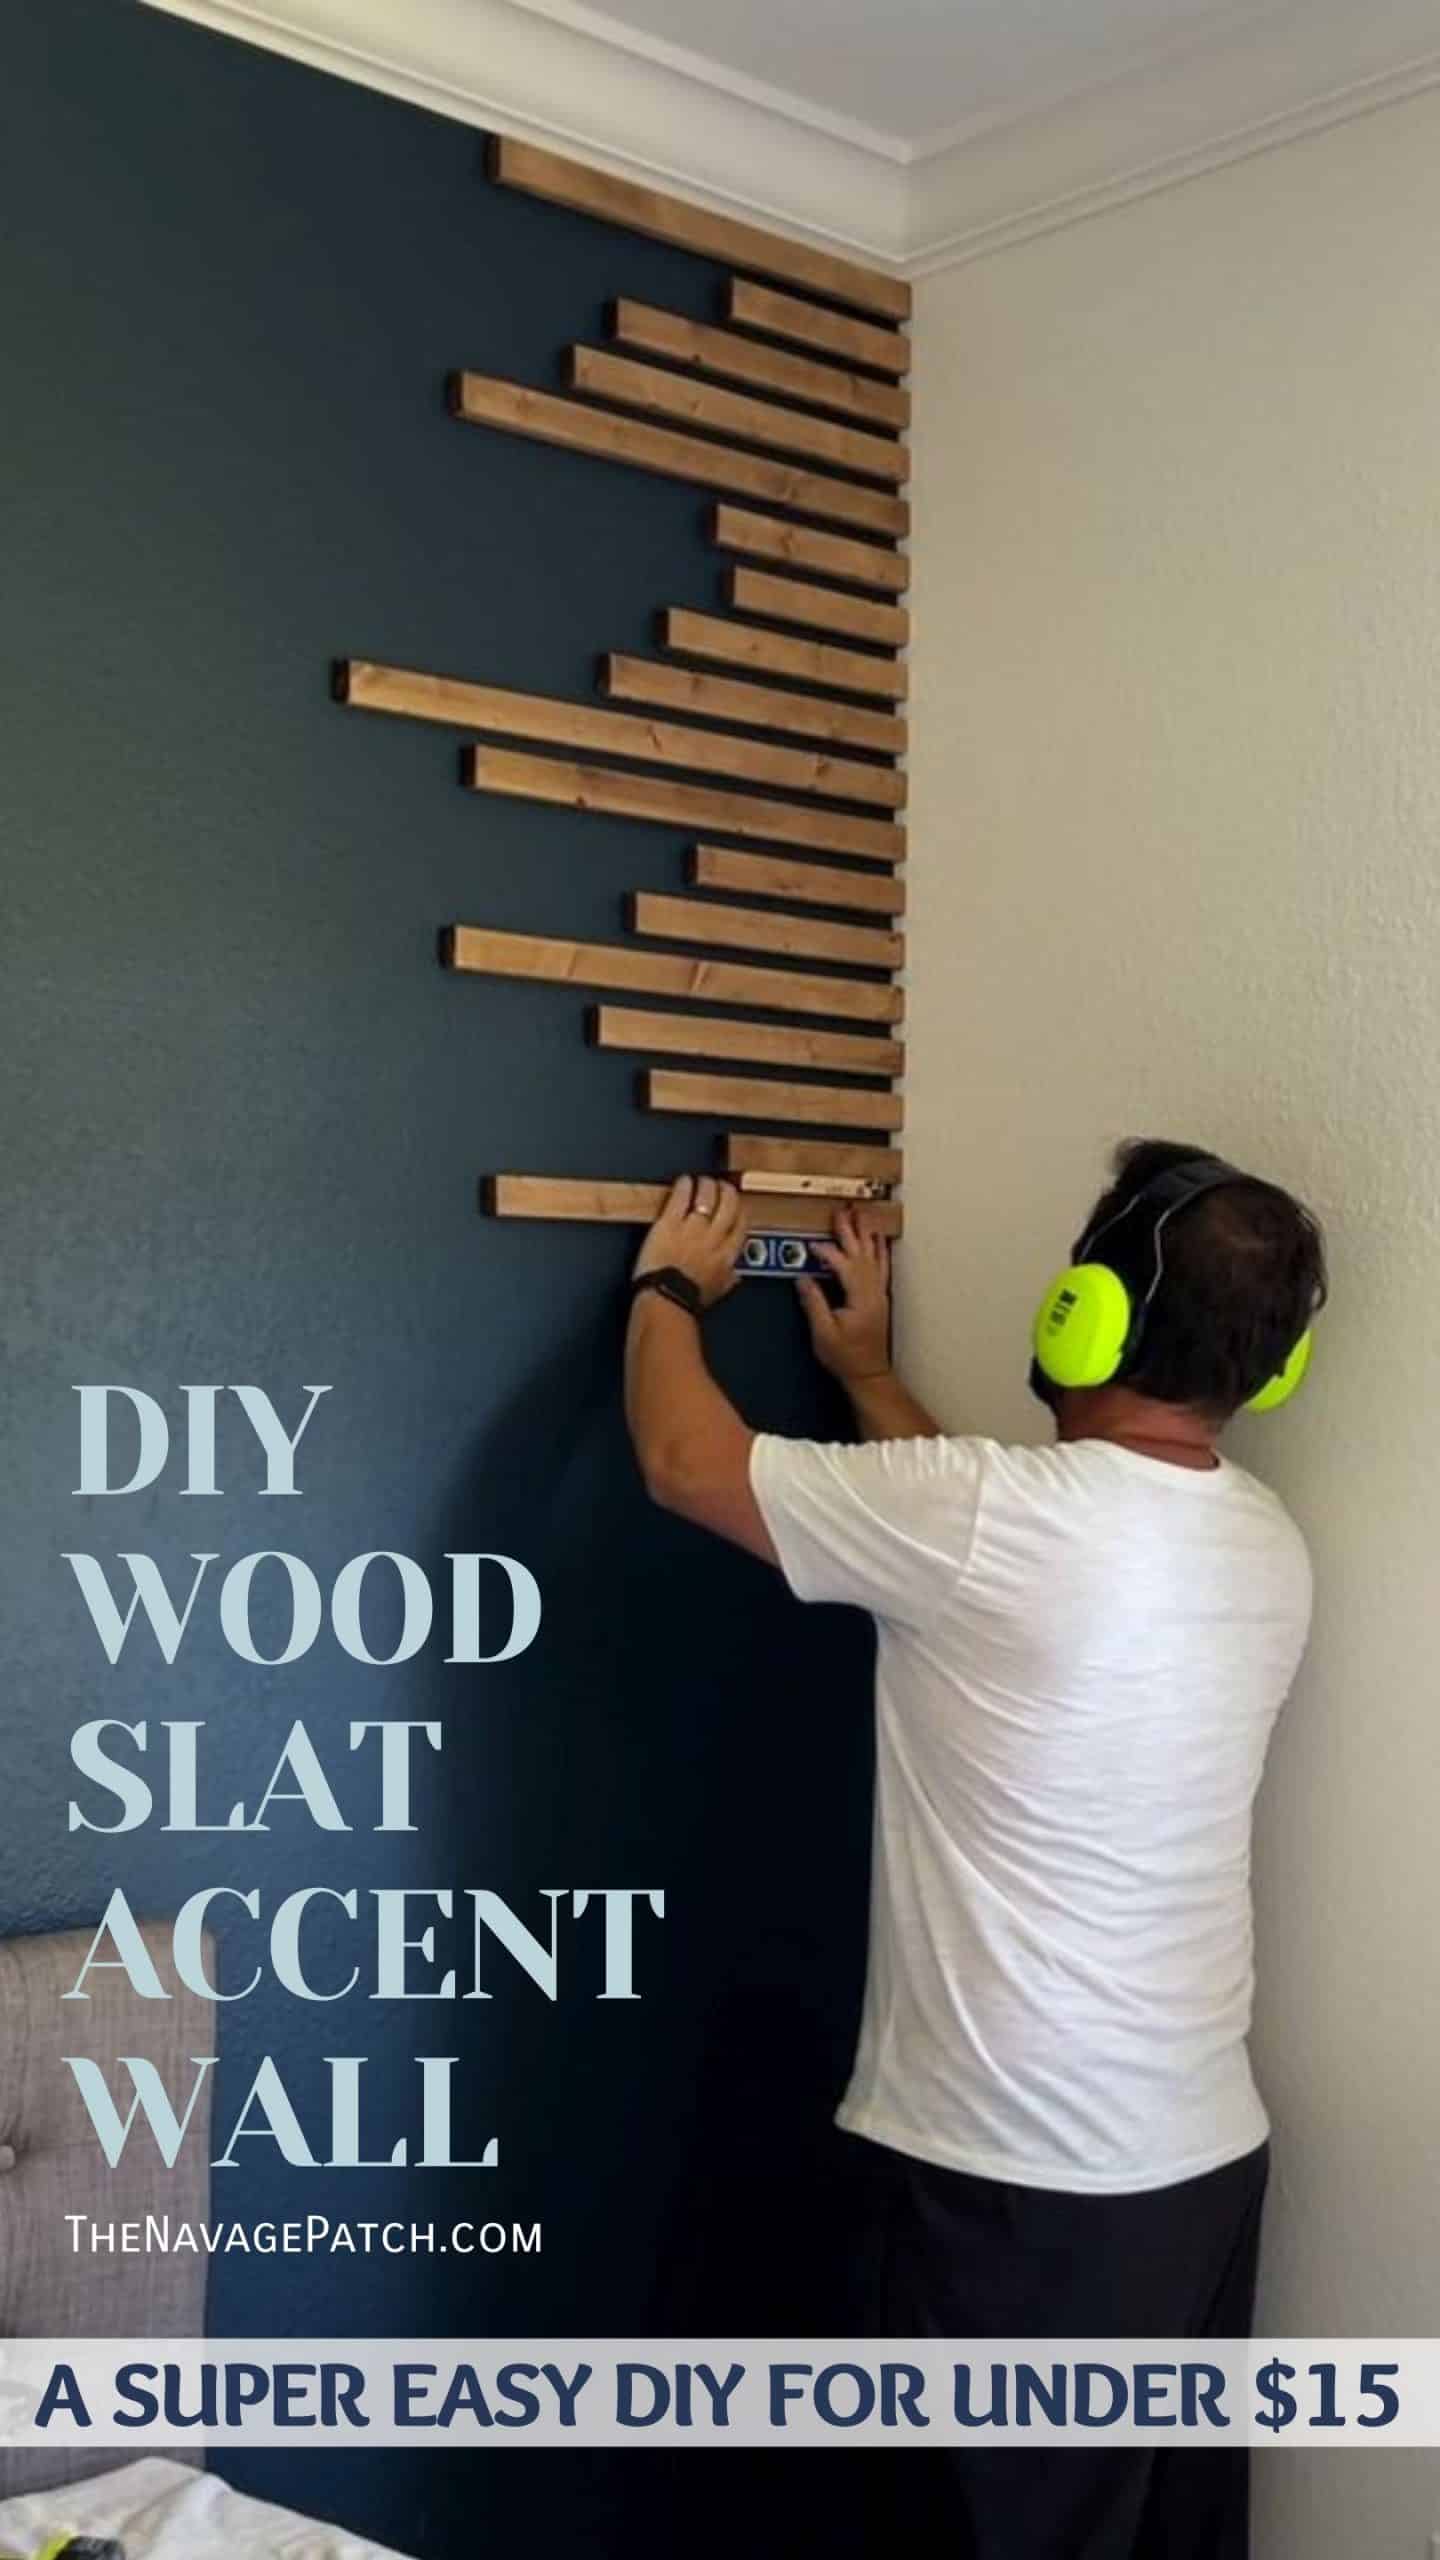 DIY Wood Slat Accent Wall - TheNavagePatch.com